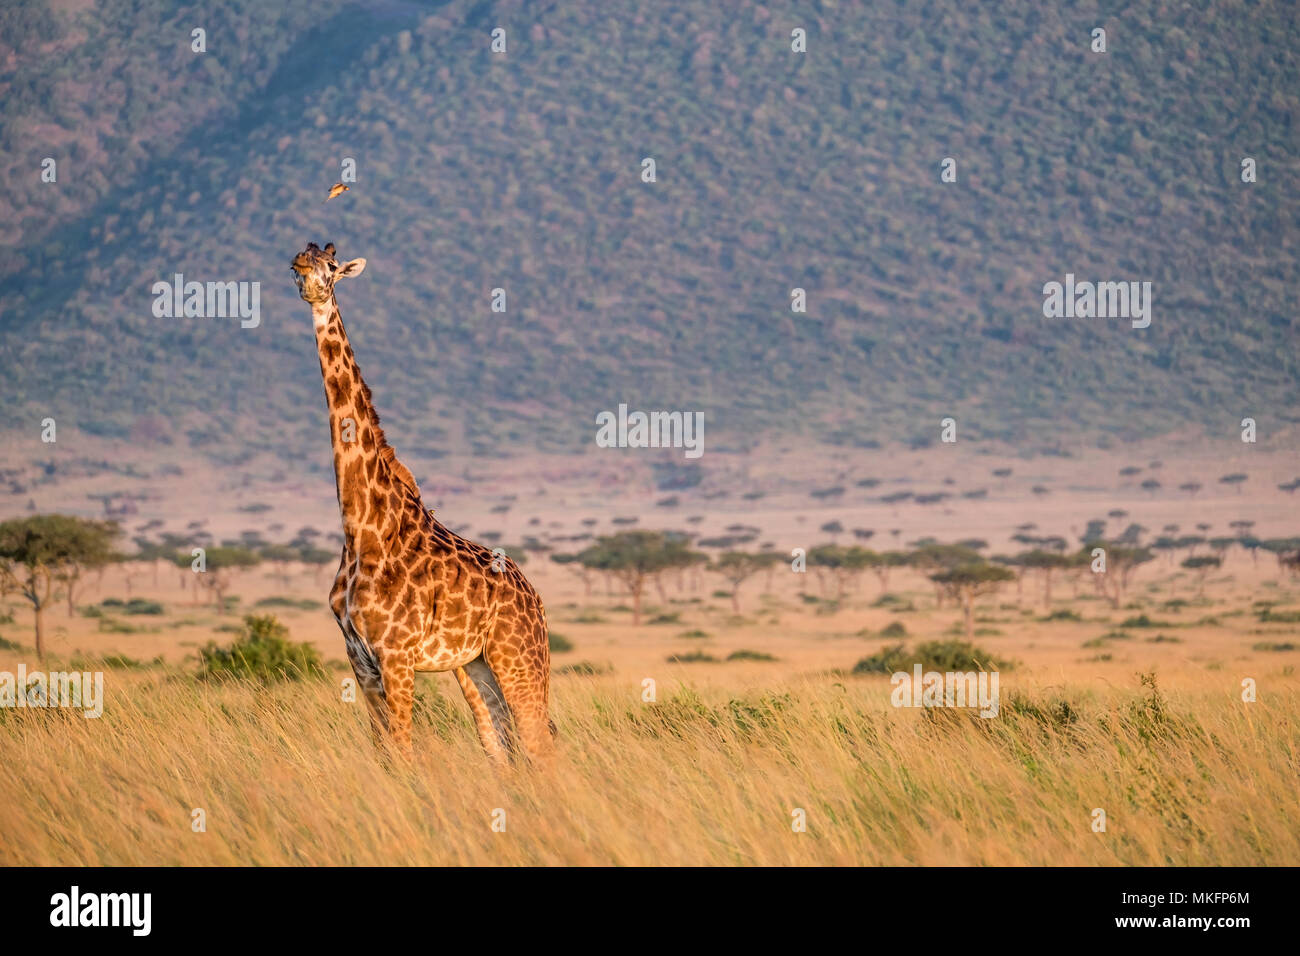 Masai giraffe (Giraffa camelopardalis tippelskirchi), male in the plains chasing an Oxpecker, Masai-Mara National Reserve, Kenya Stock Photo